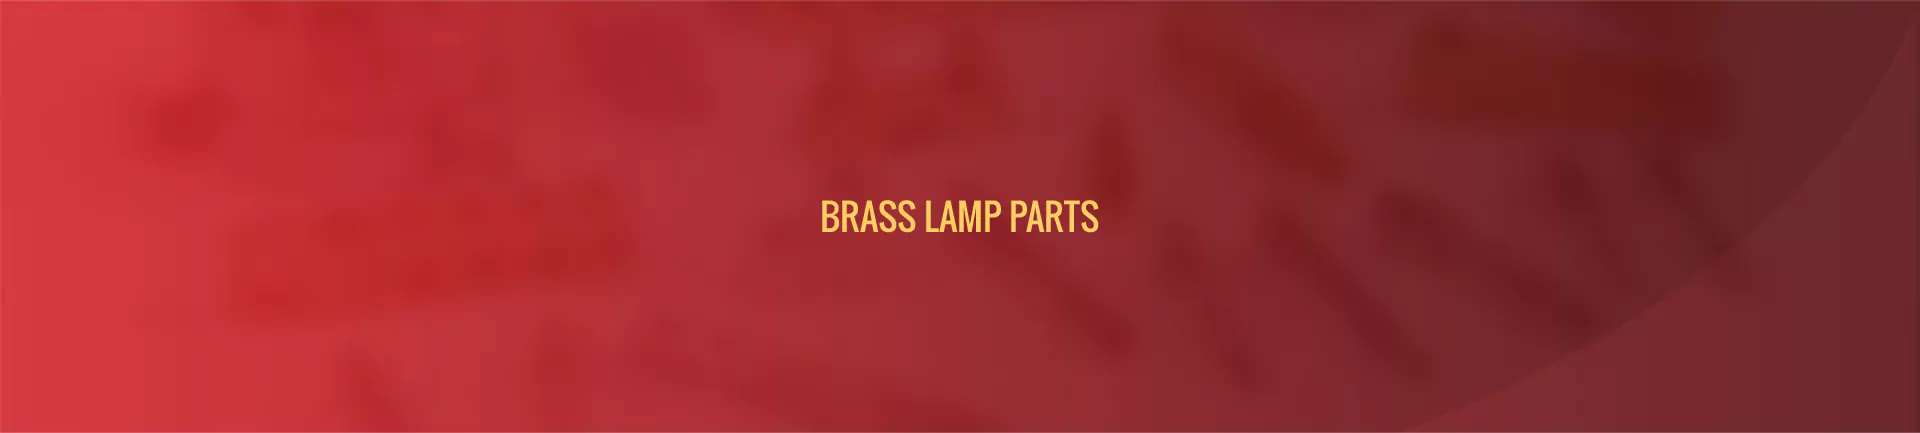 brass-lamp-parts-banner